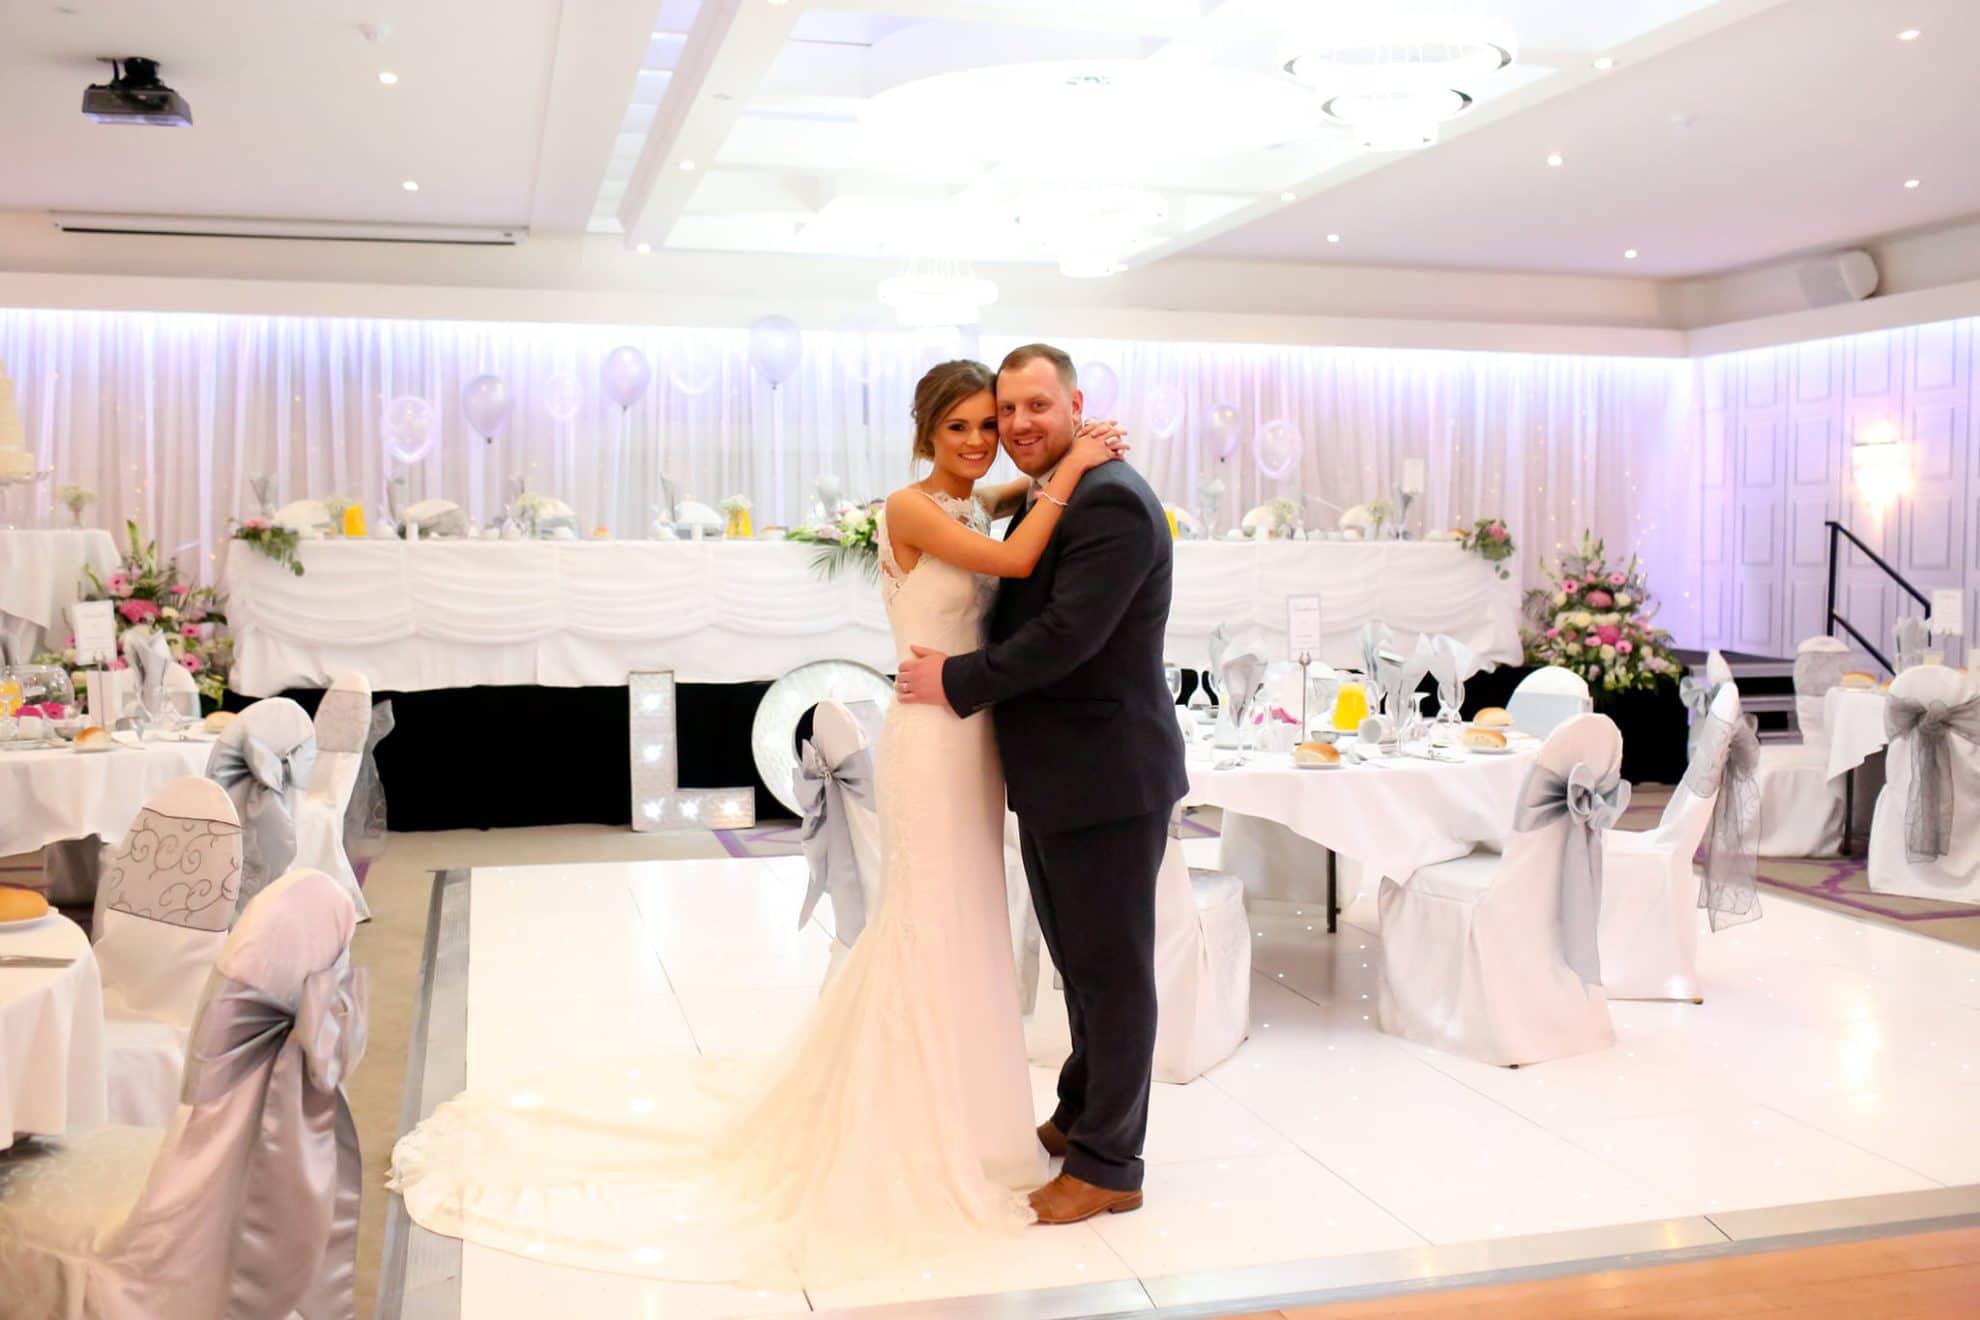 WEDDING VENUES IN COUNTY TYRONE